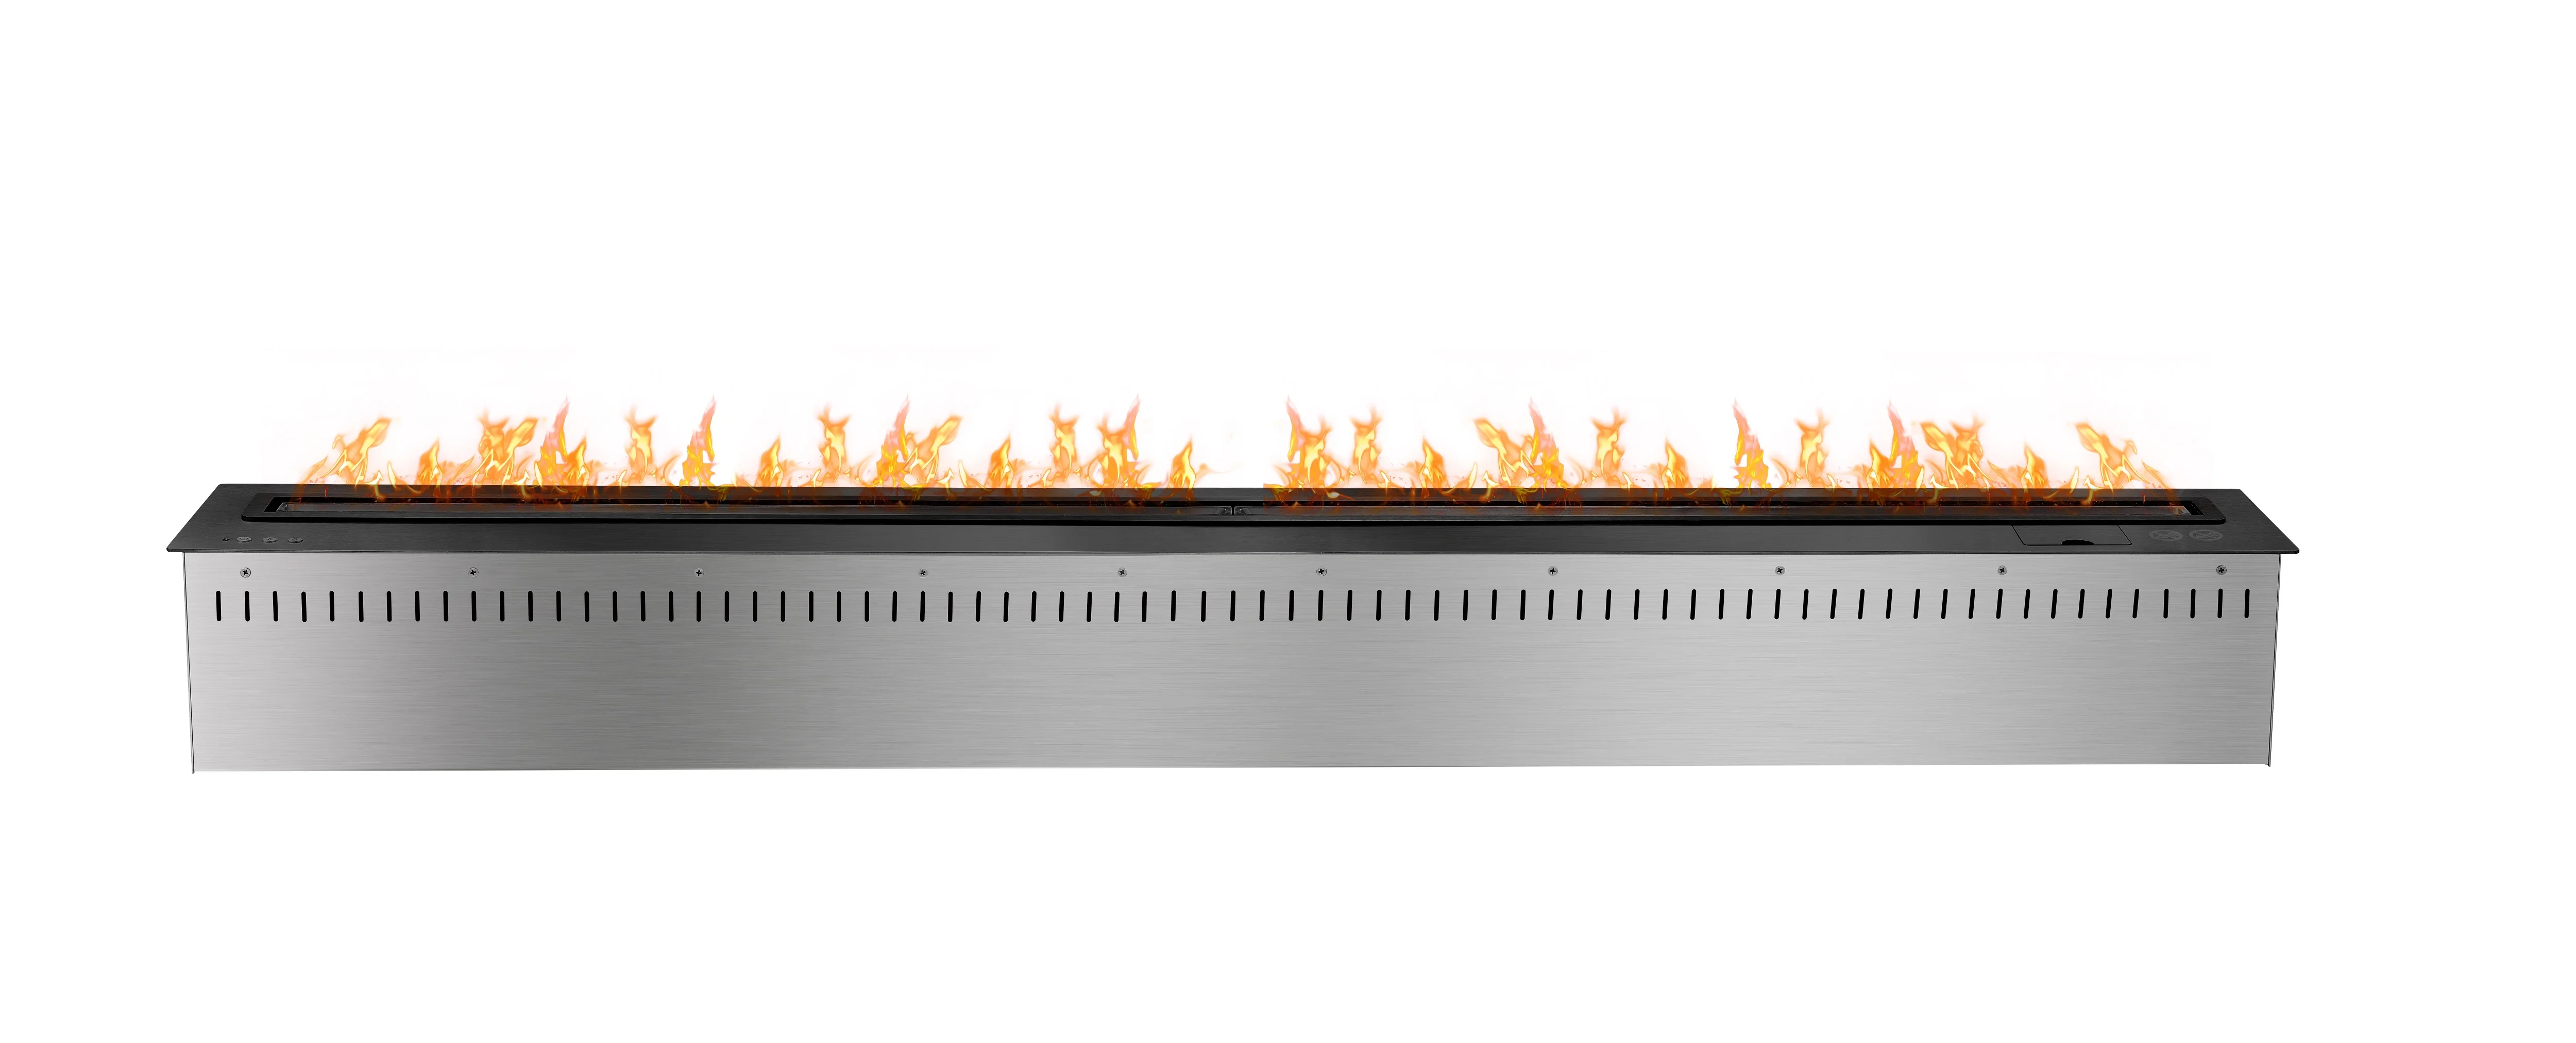 
C inno fire 60 inch intelligent stainless steel remote control bio ethanol fireplace insert 